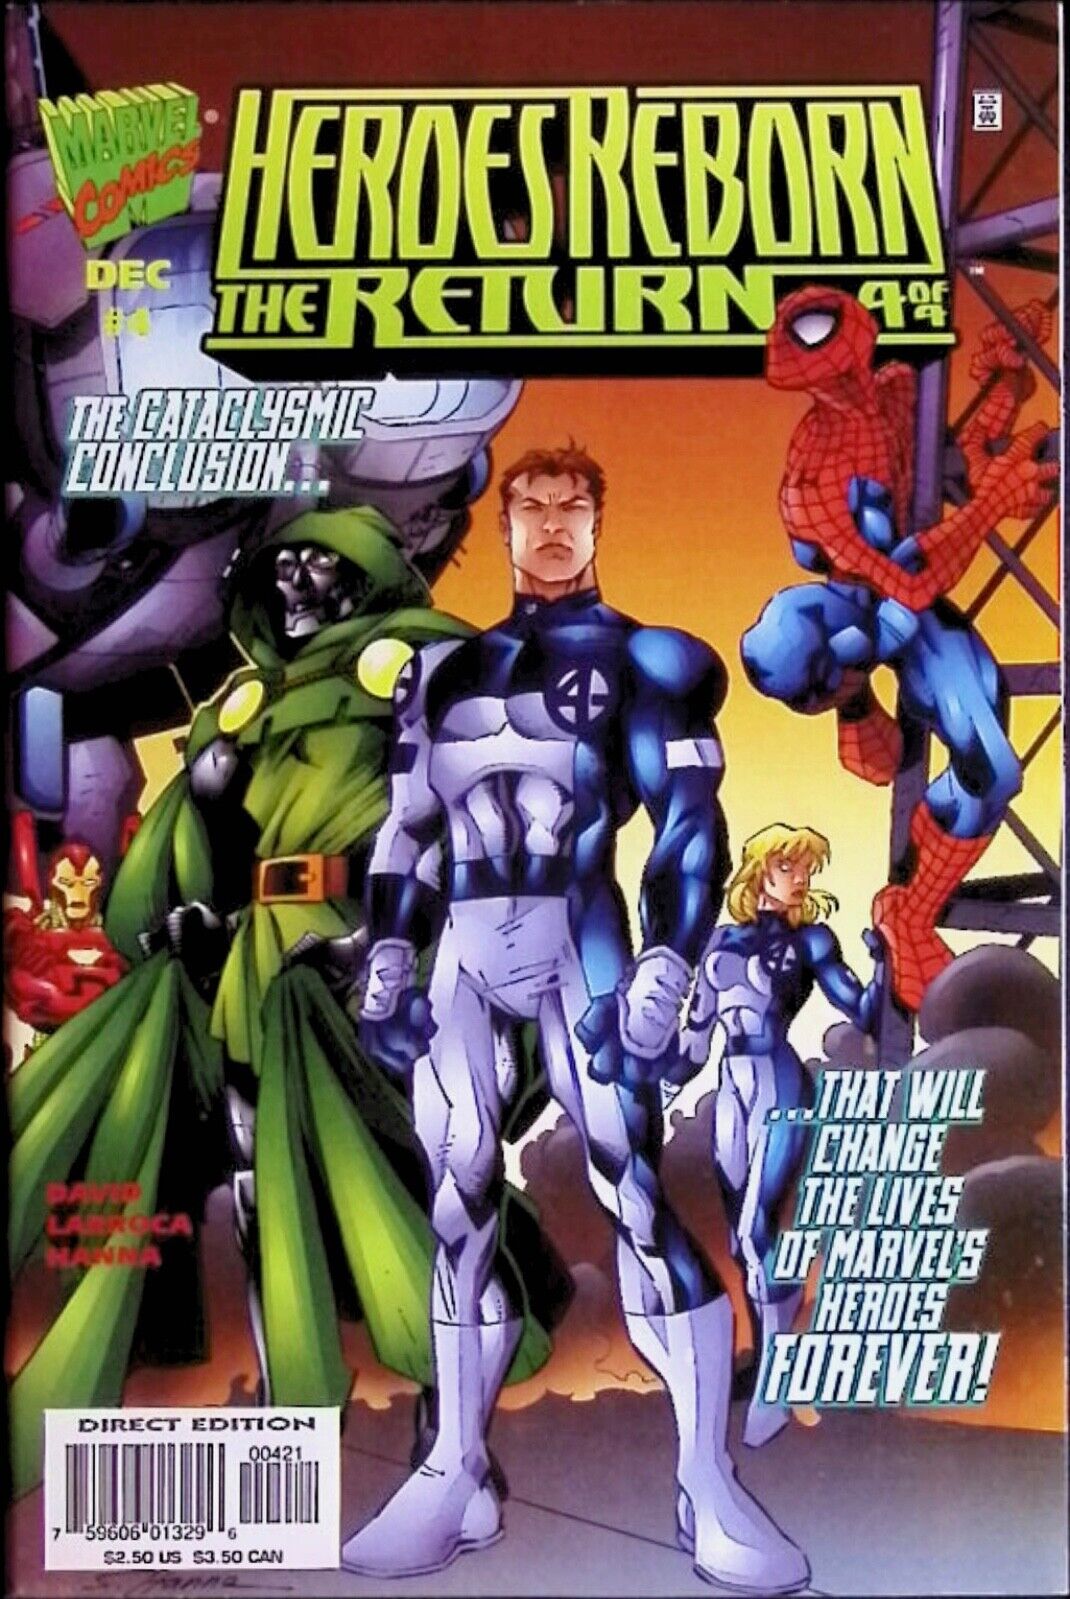 HEROES REBORN THE RETURN Comic 4 — Variant Cover B — 1997 Marvel Universe VF+